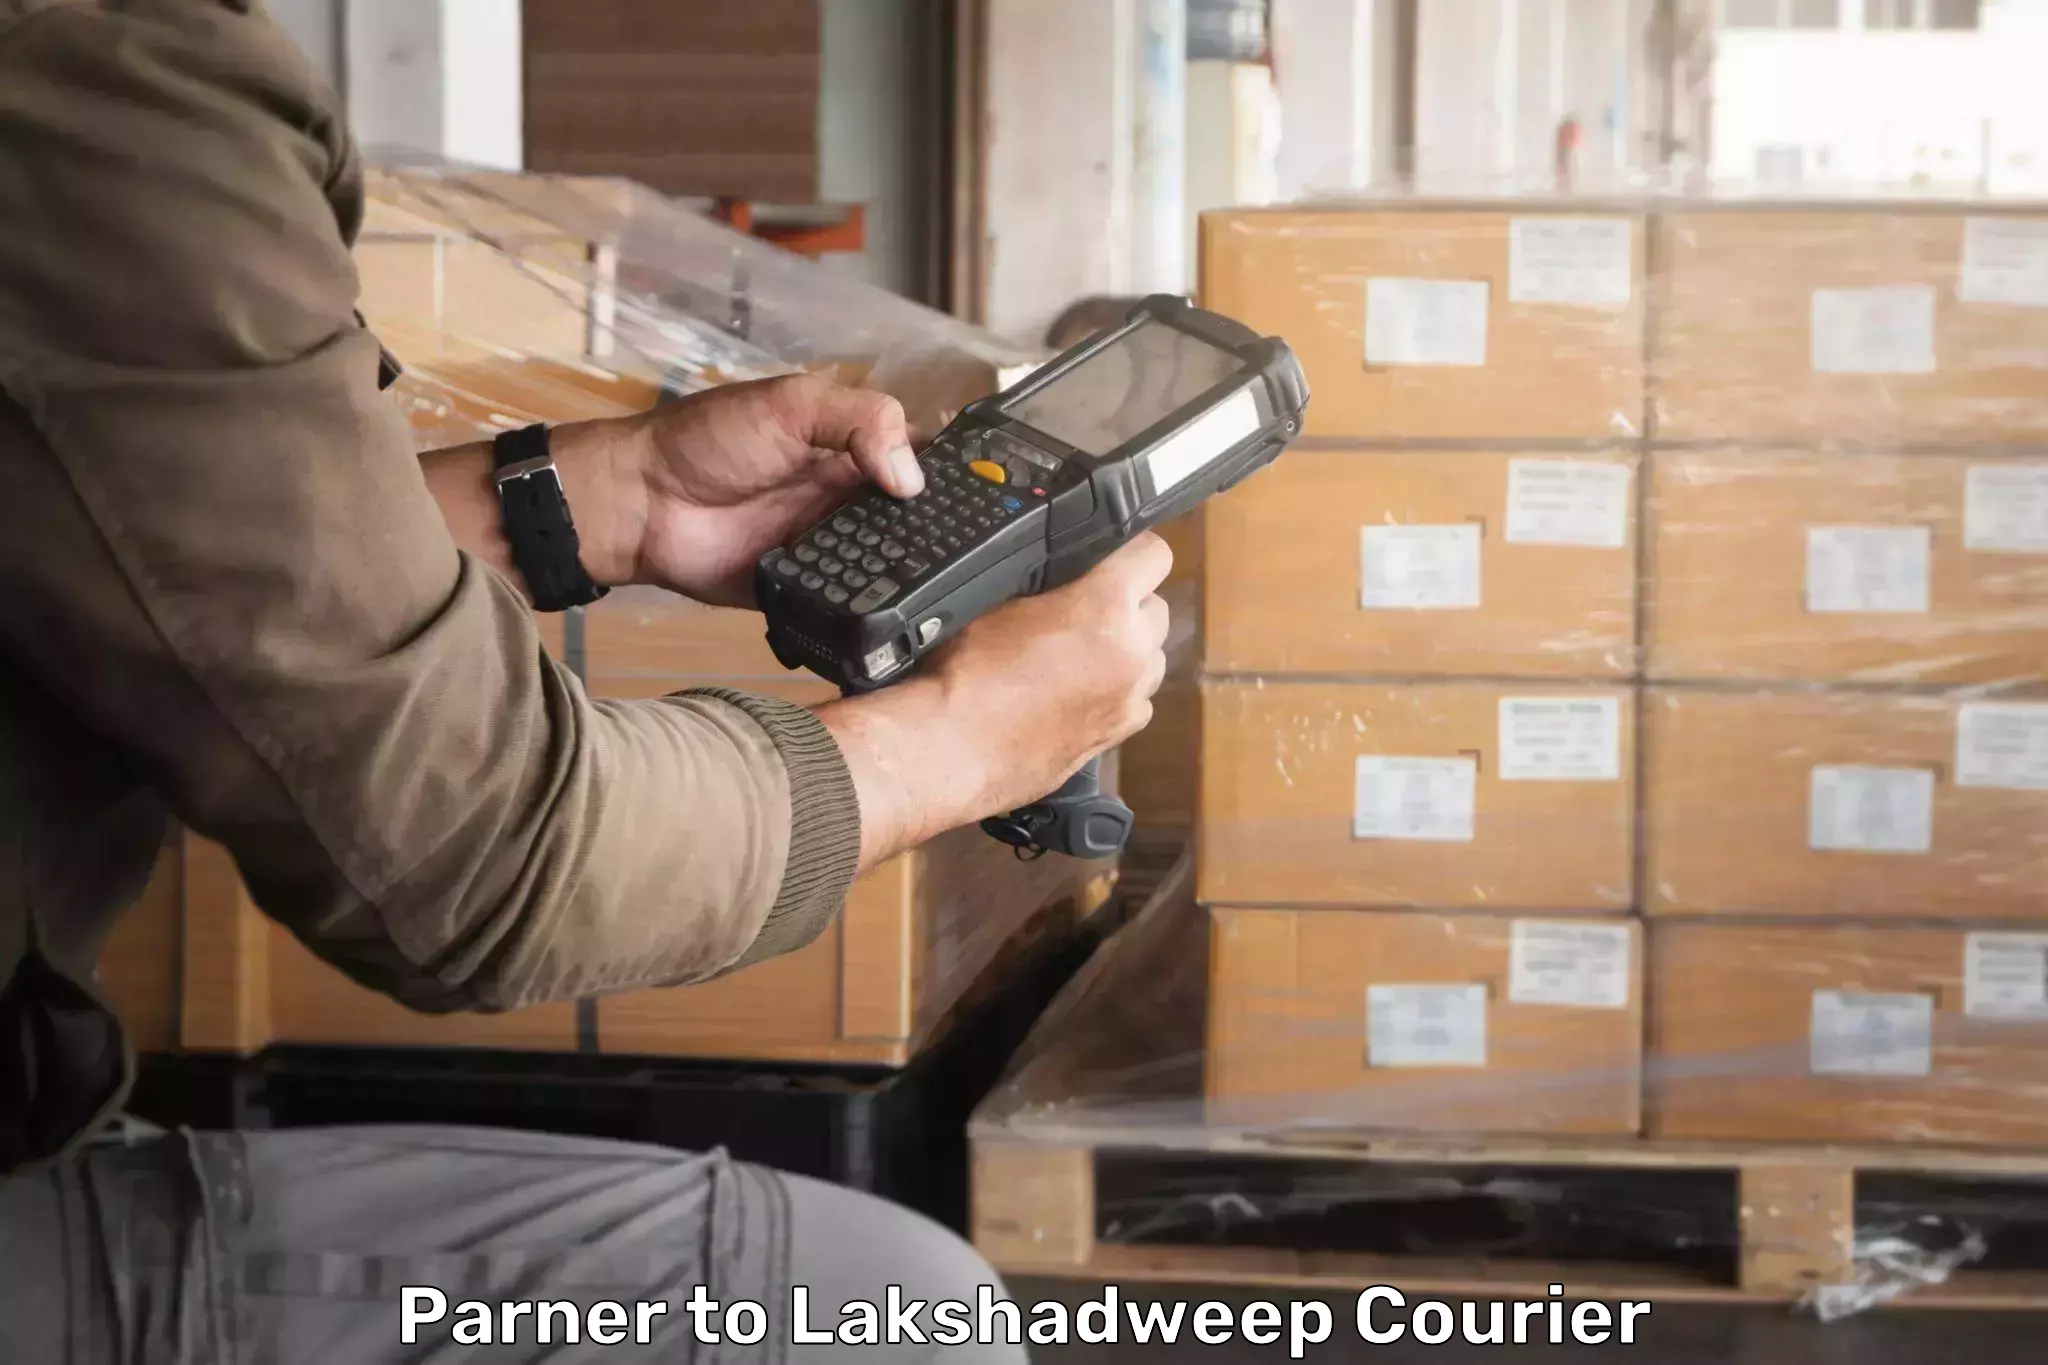 Seamless shipping service Parner to Lakshadweep